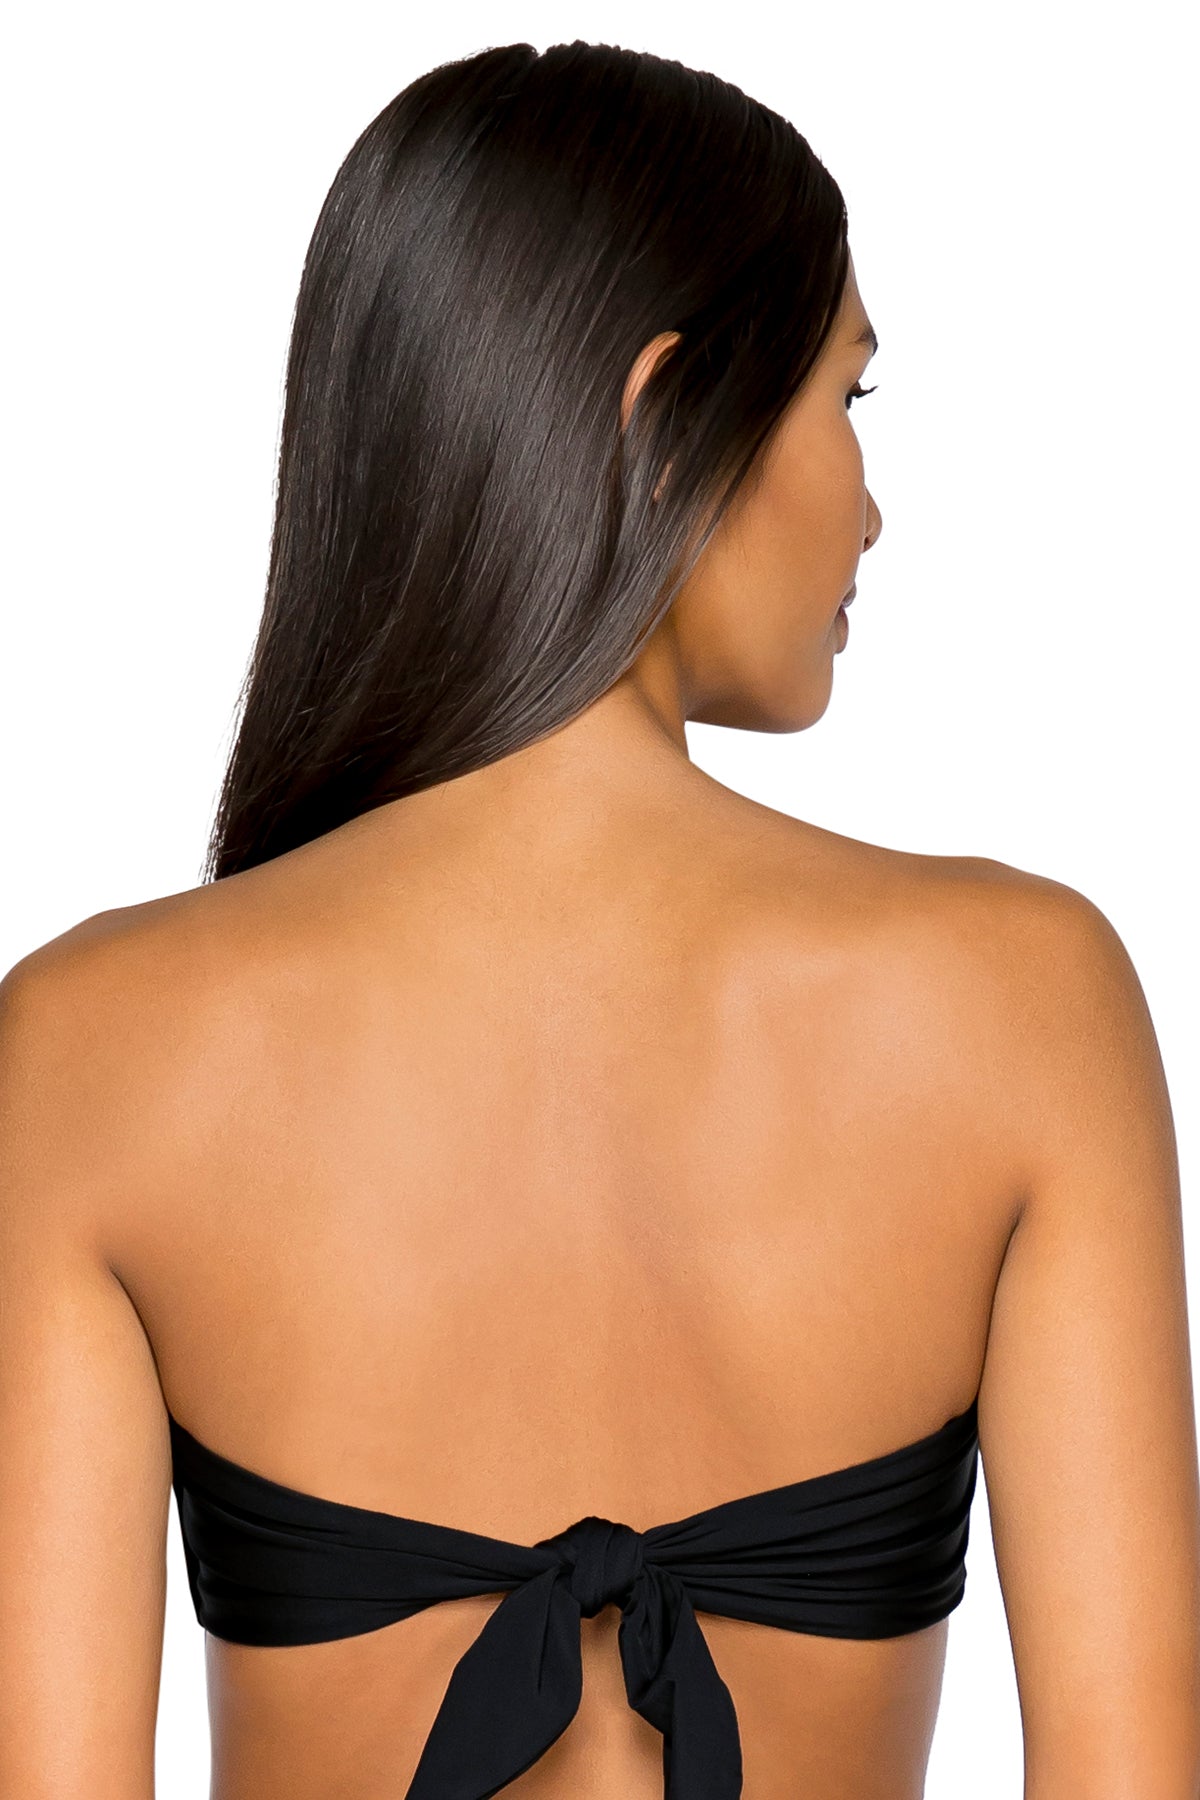 Back view of B Swim Black Out Calypso Top worn as a strapless bandeau bikini, showing back tie